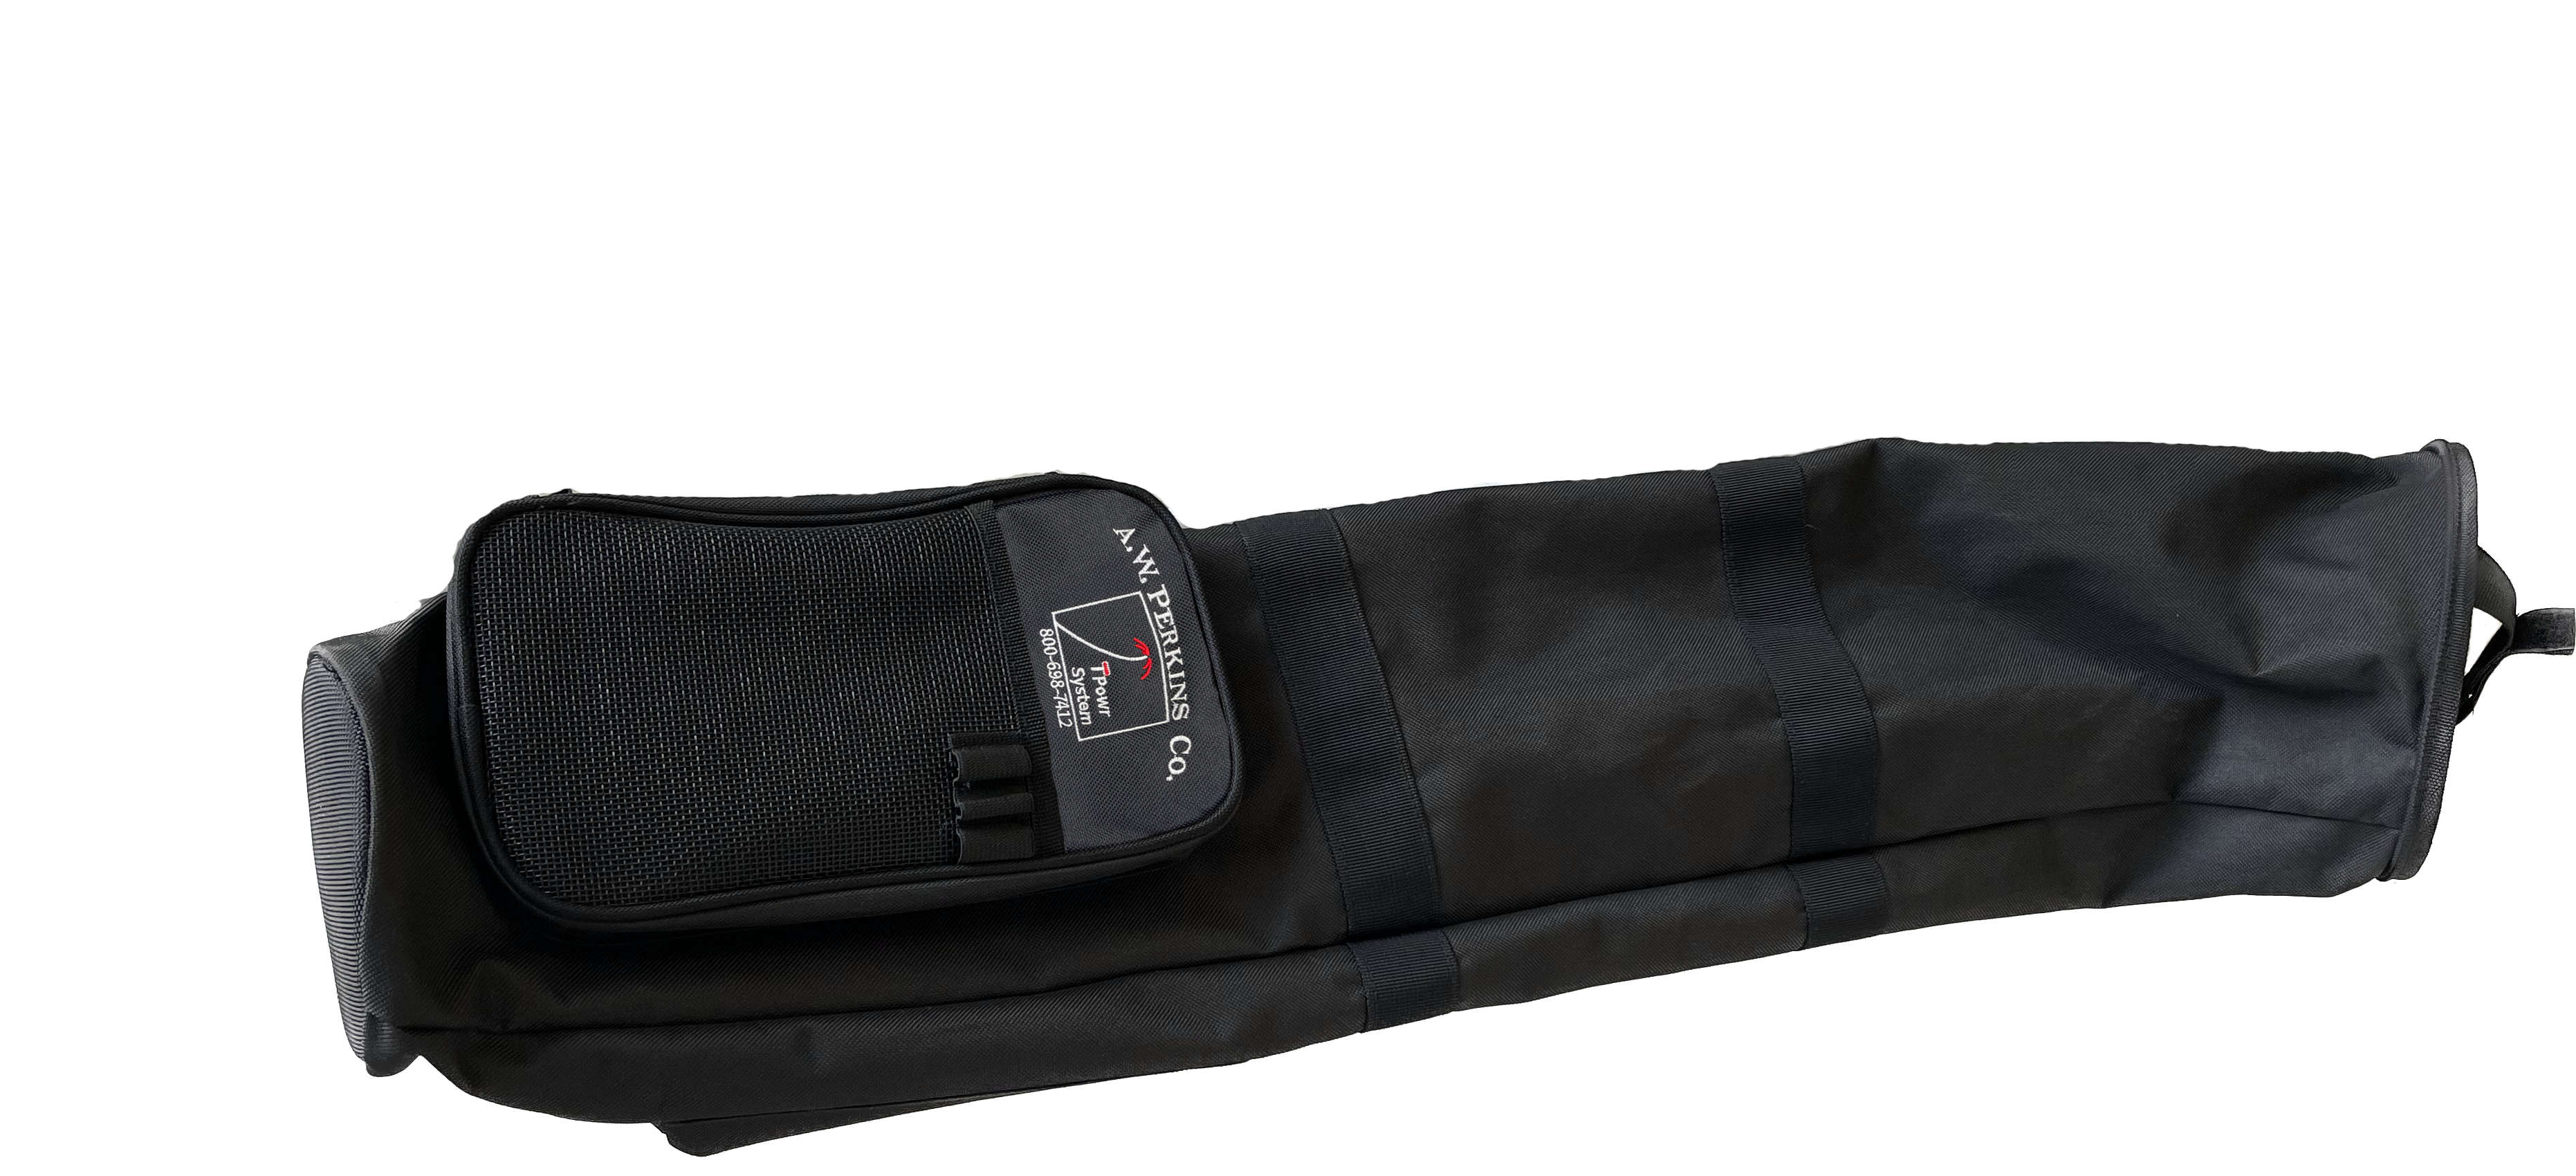 RB1 TPowr Rod Bag, 33", black nylon, one pocket, carry strap